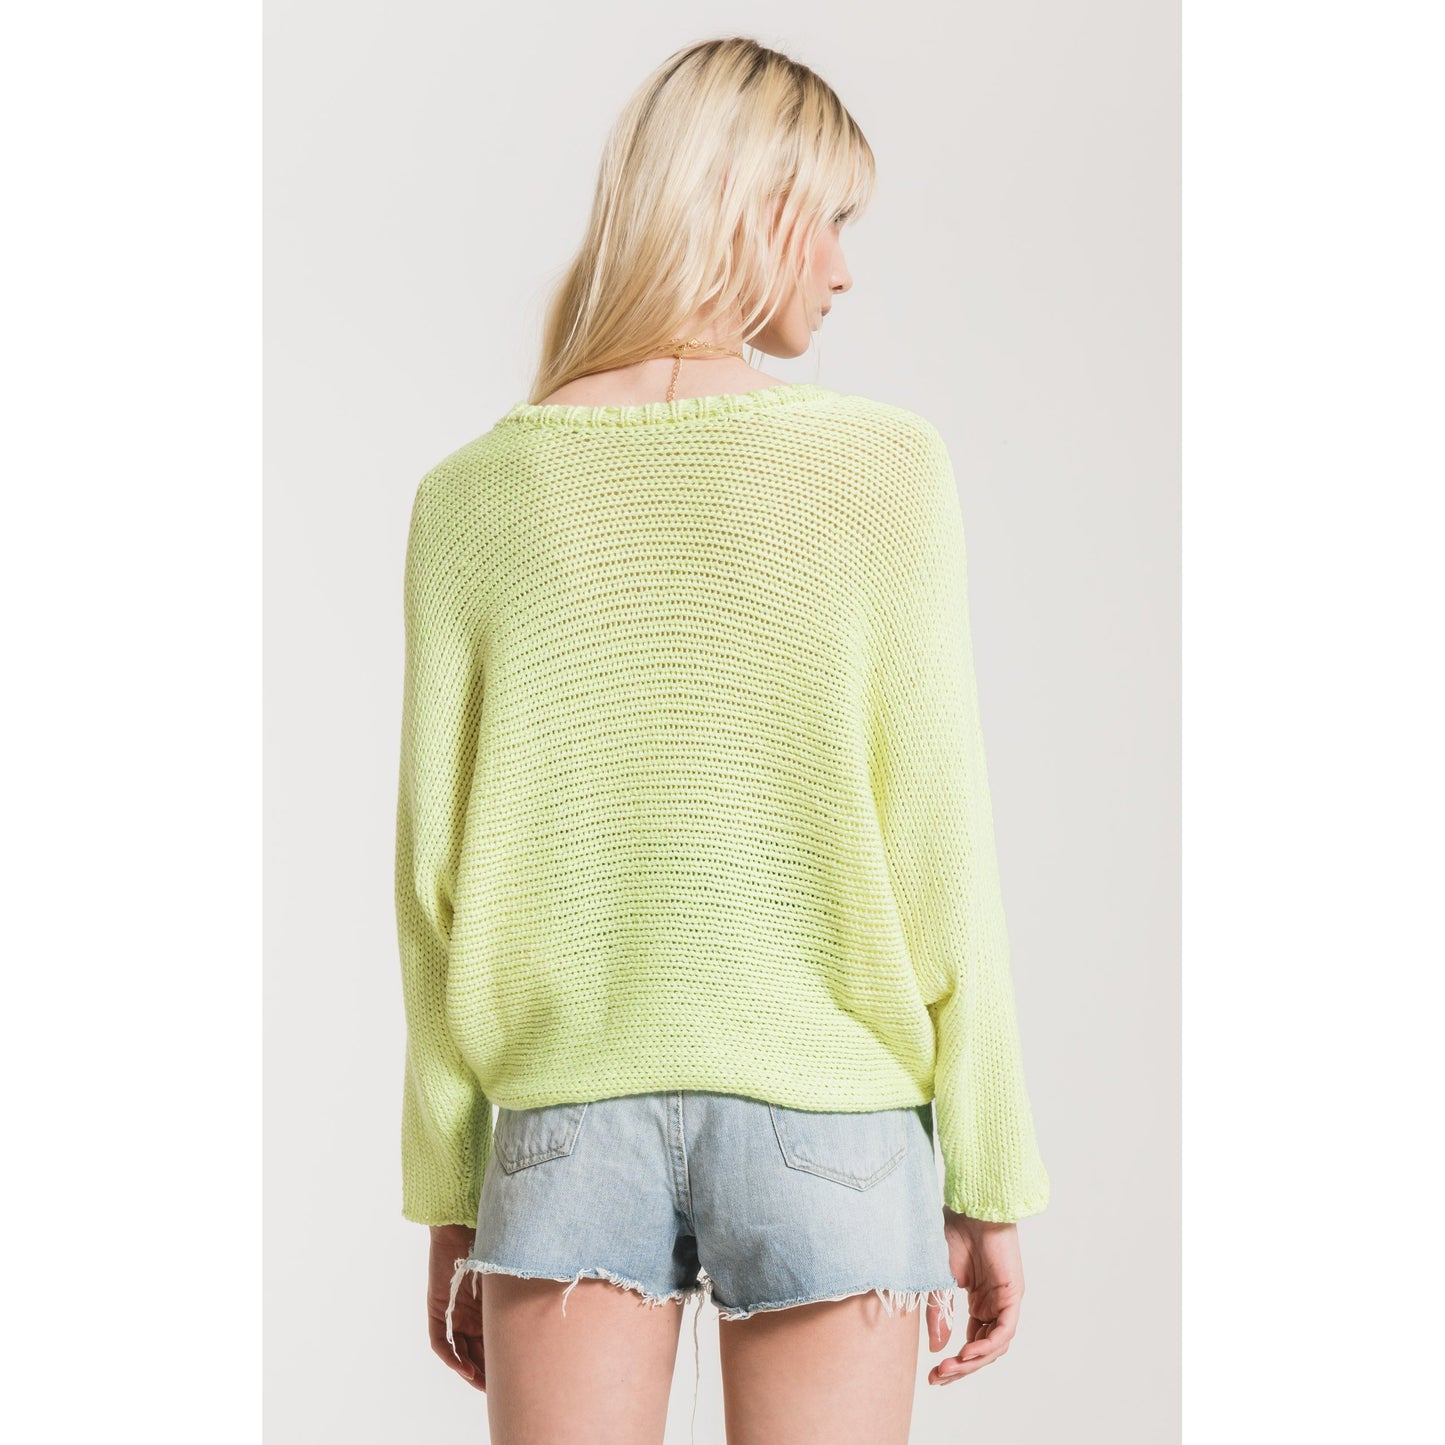 The Neon Cipriani Sweater